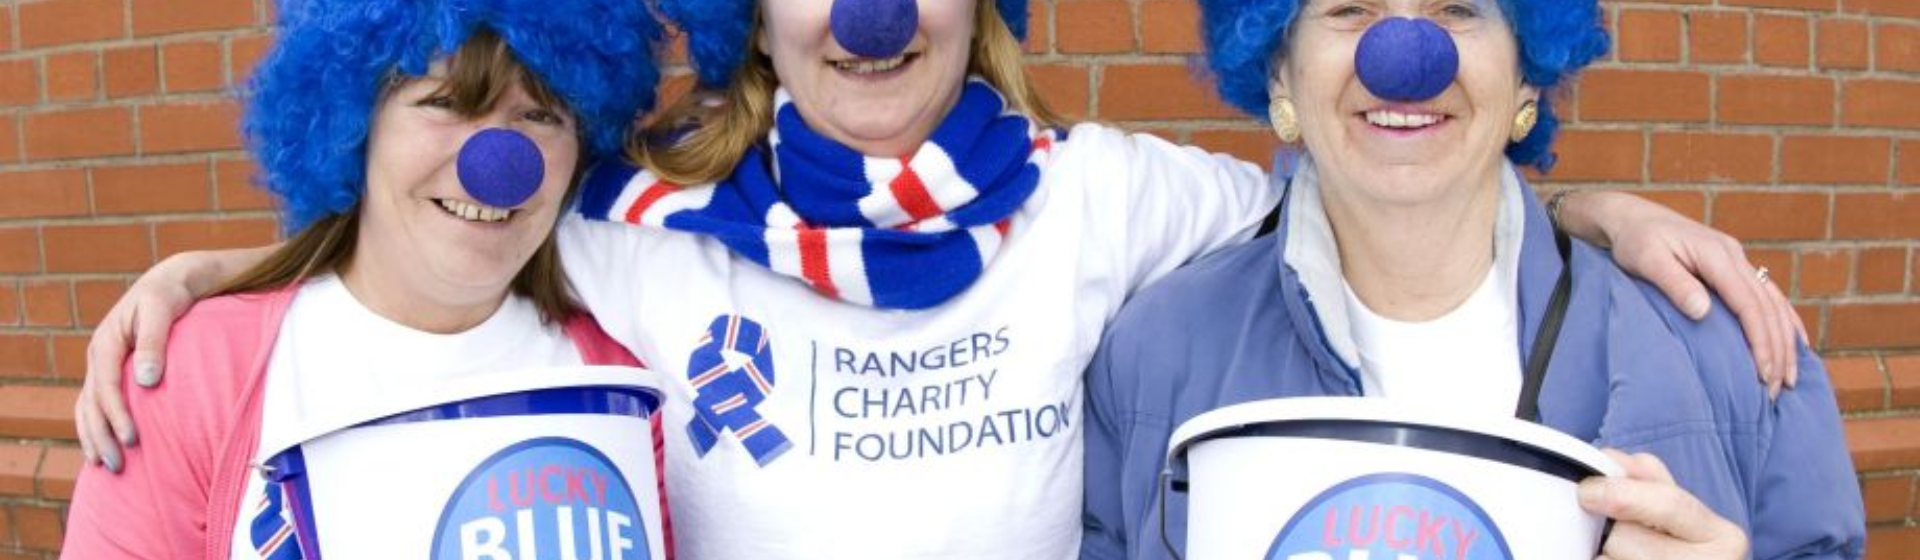 Rangers Charity Foundation header